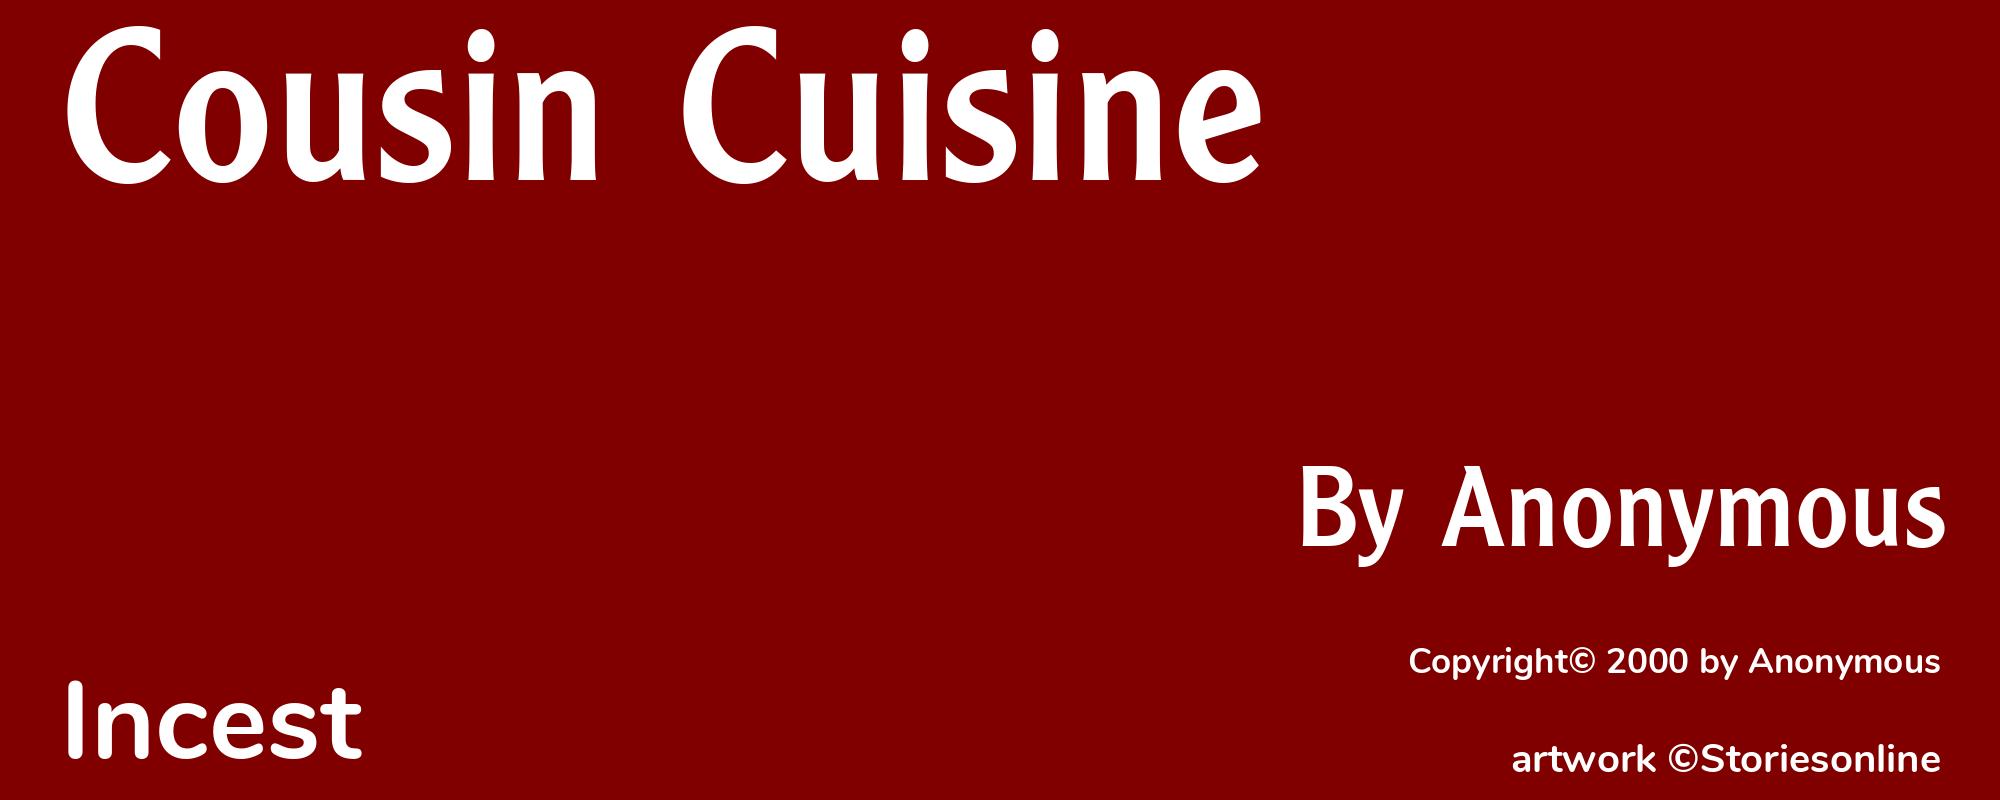 Cousin Cuisine - Cover